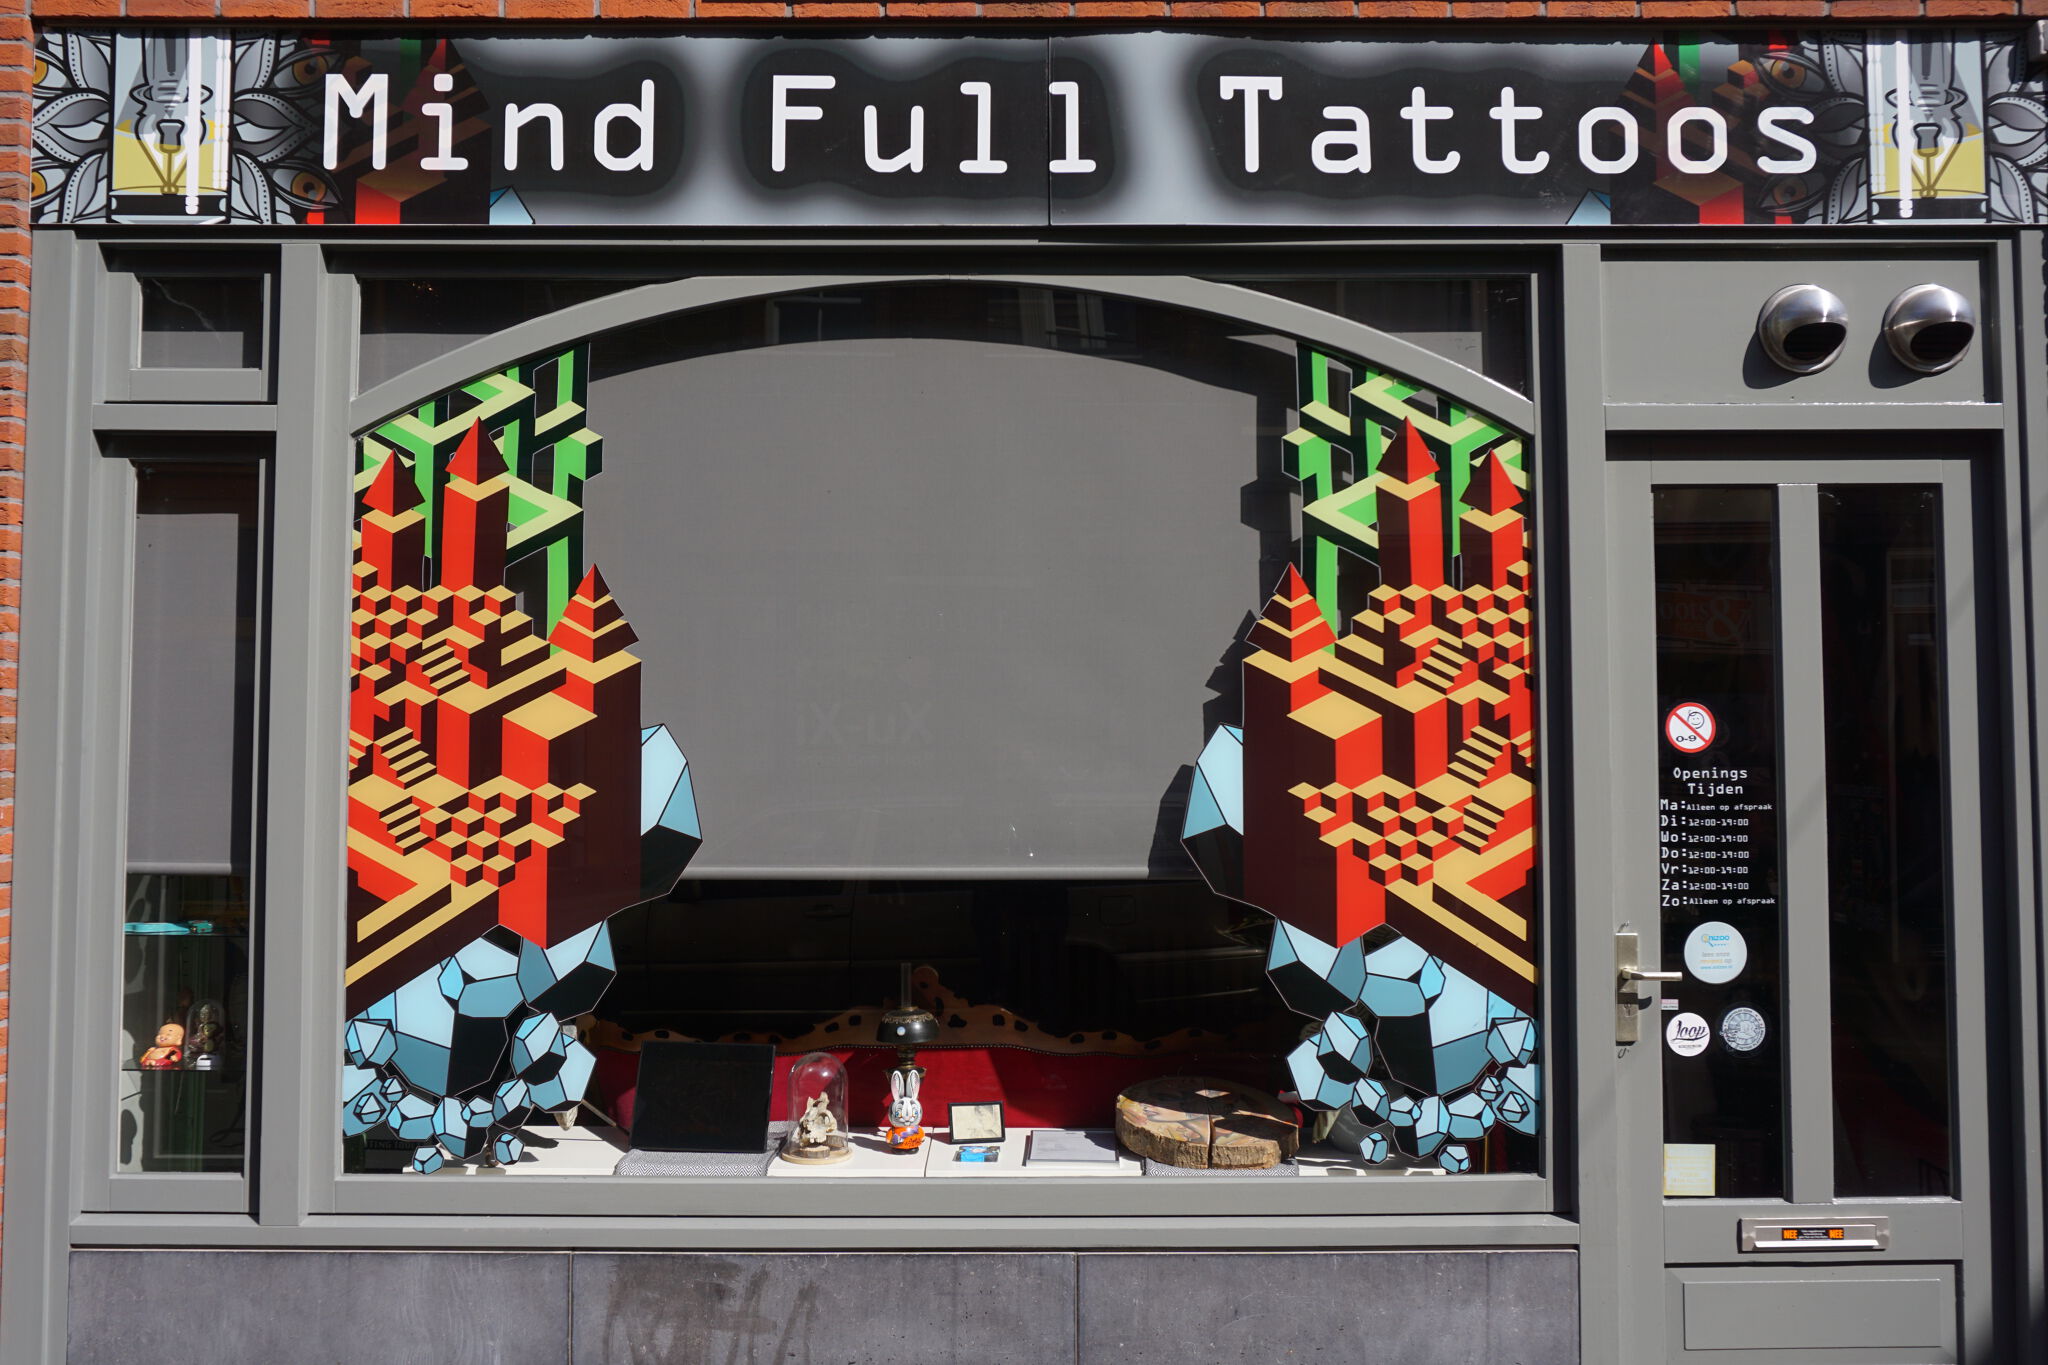 &mdash;Mind Full Tattoos